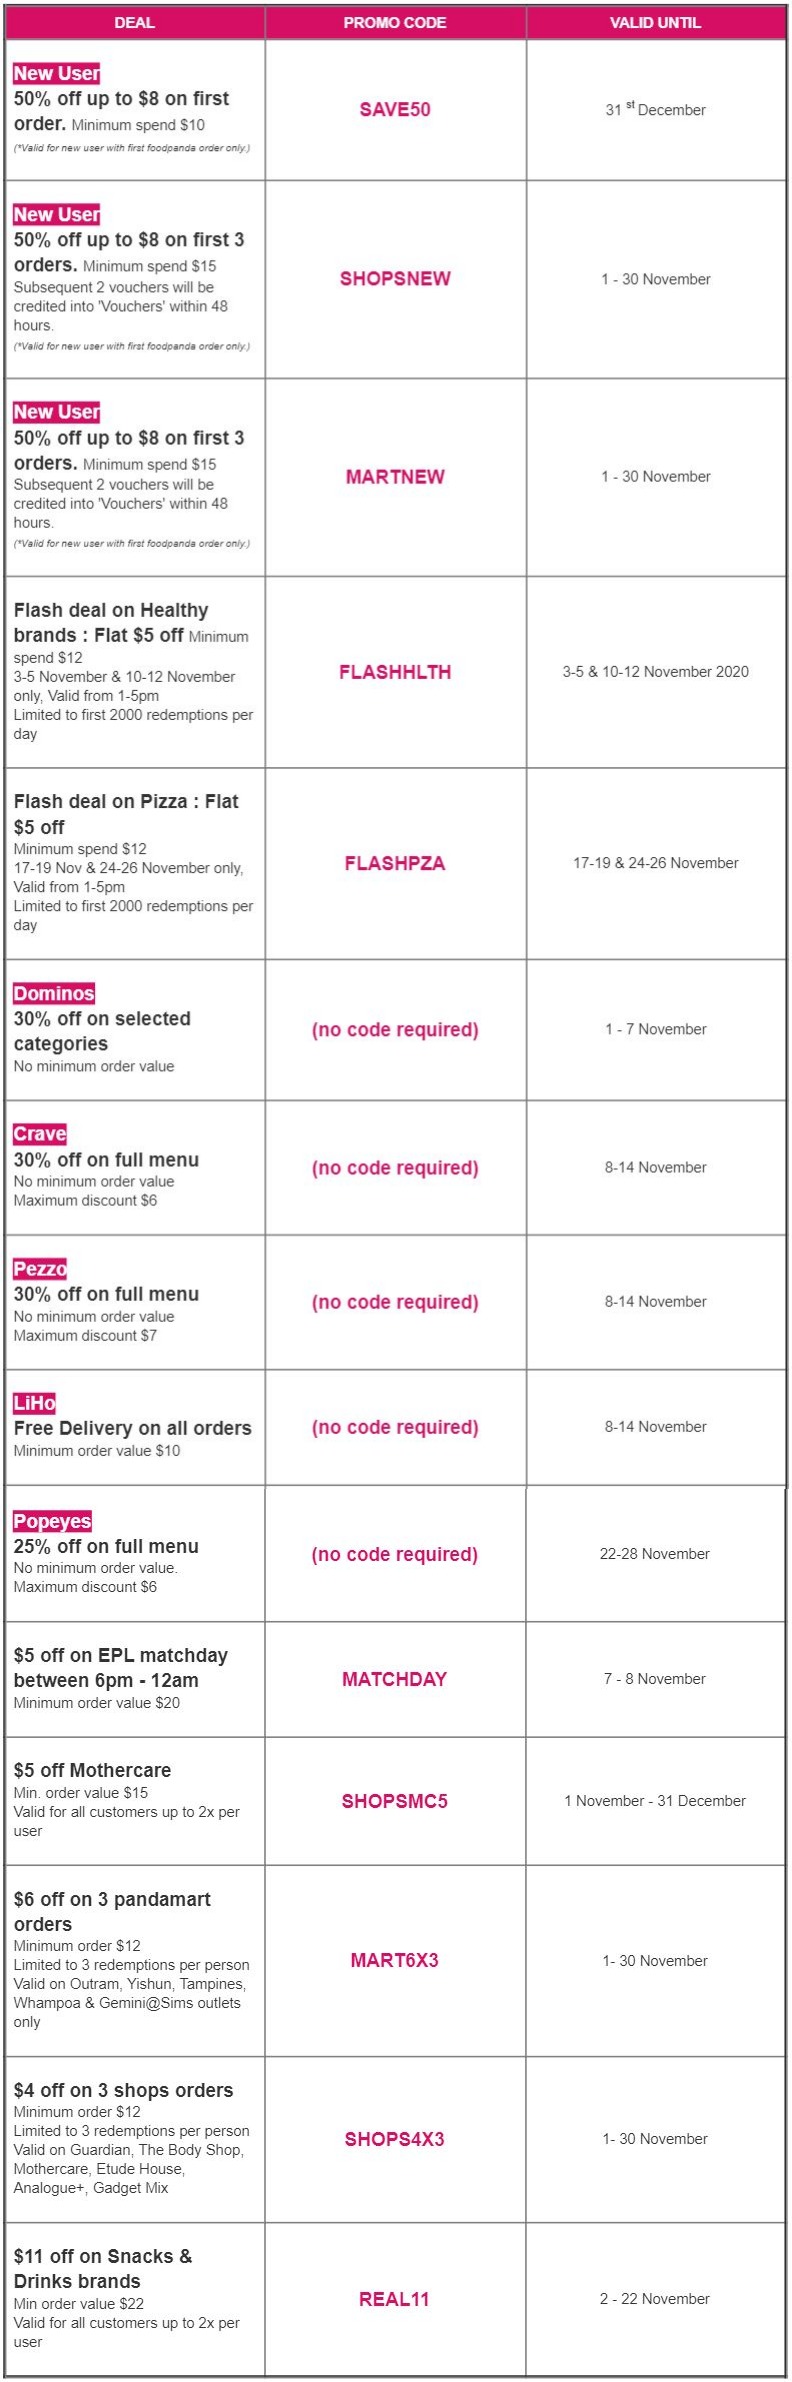 Here are 18 foodpanda promo codes for use in November 2020 - 1